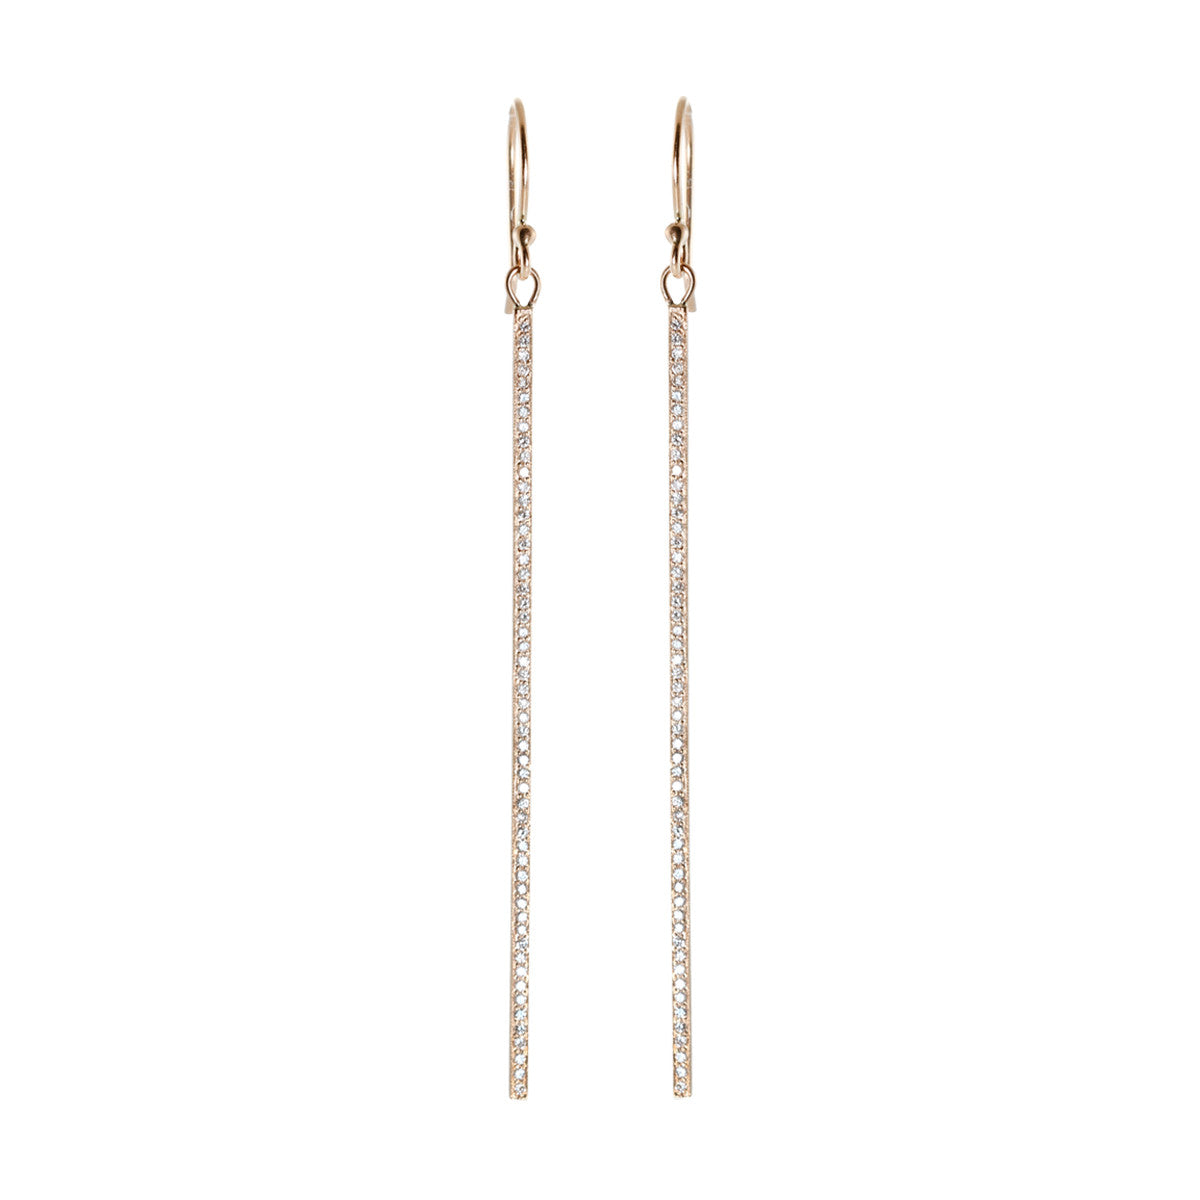 Zoë Chicco – 14k pave thin bar earrings